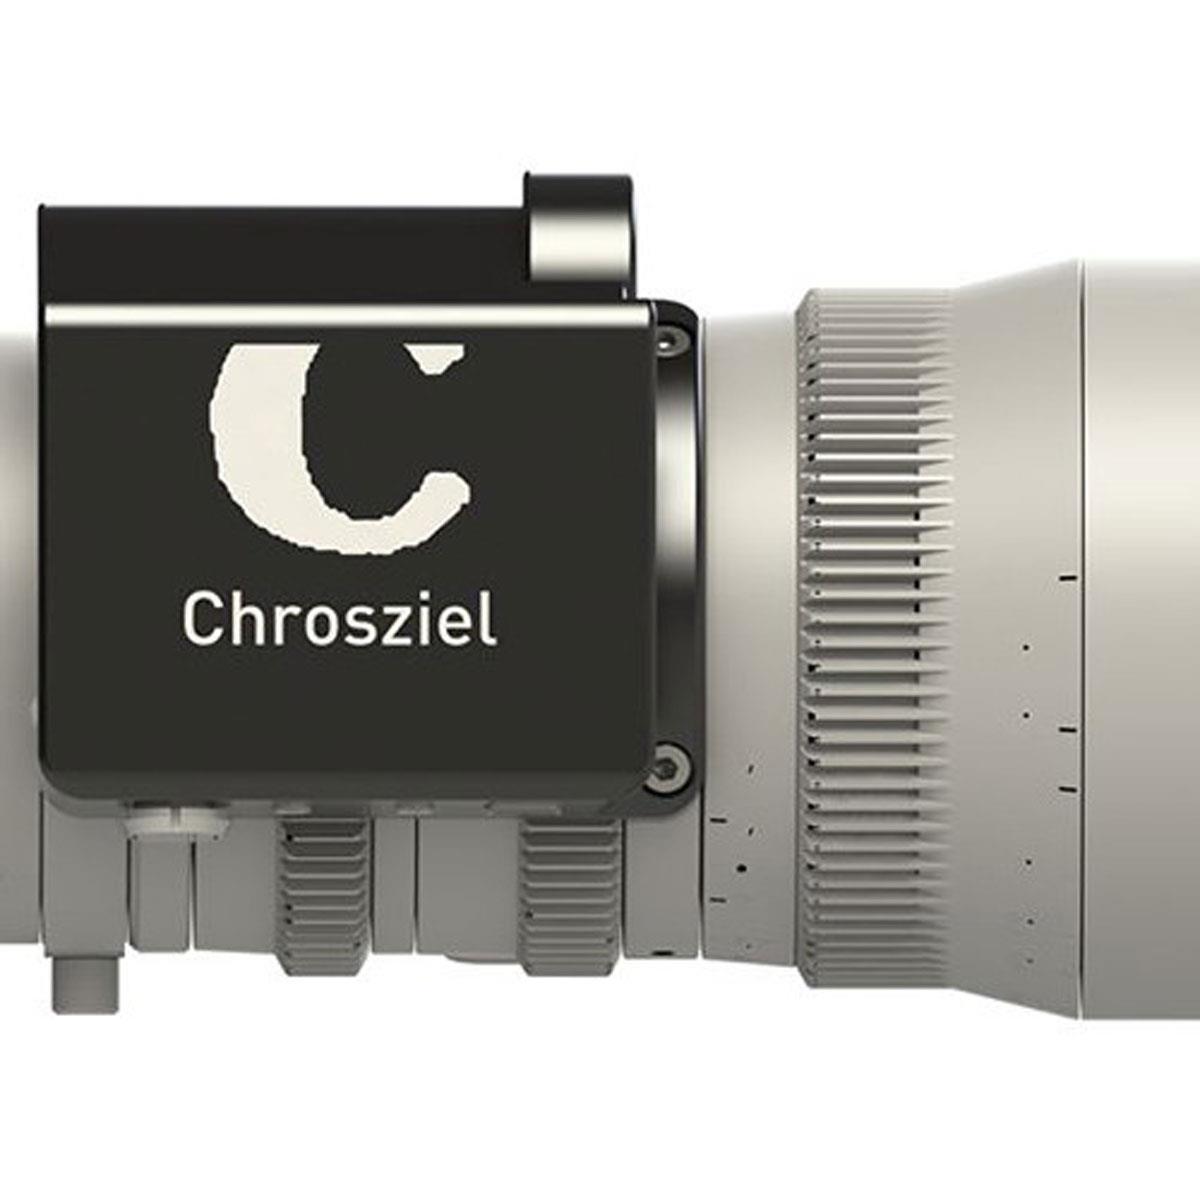 Image of Chrosziel Zoom Control Kit for Fujinon MK Lenses